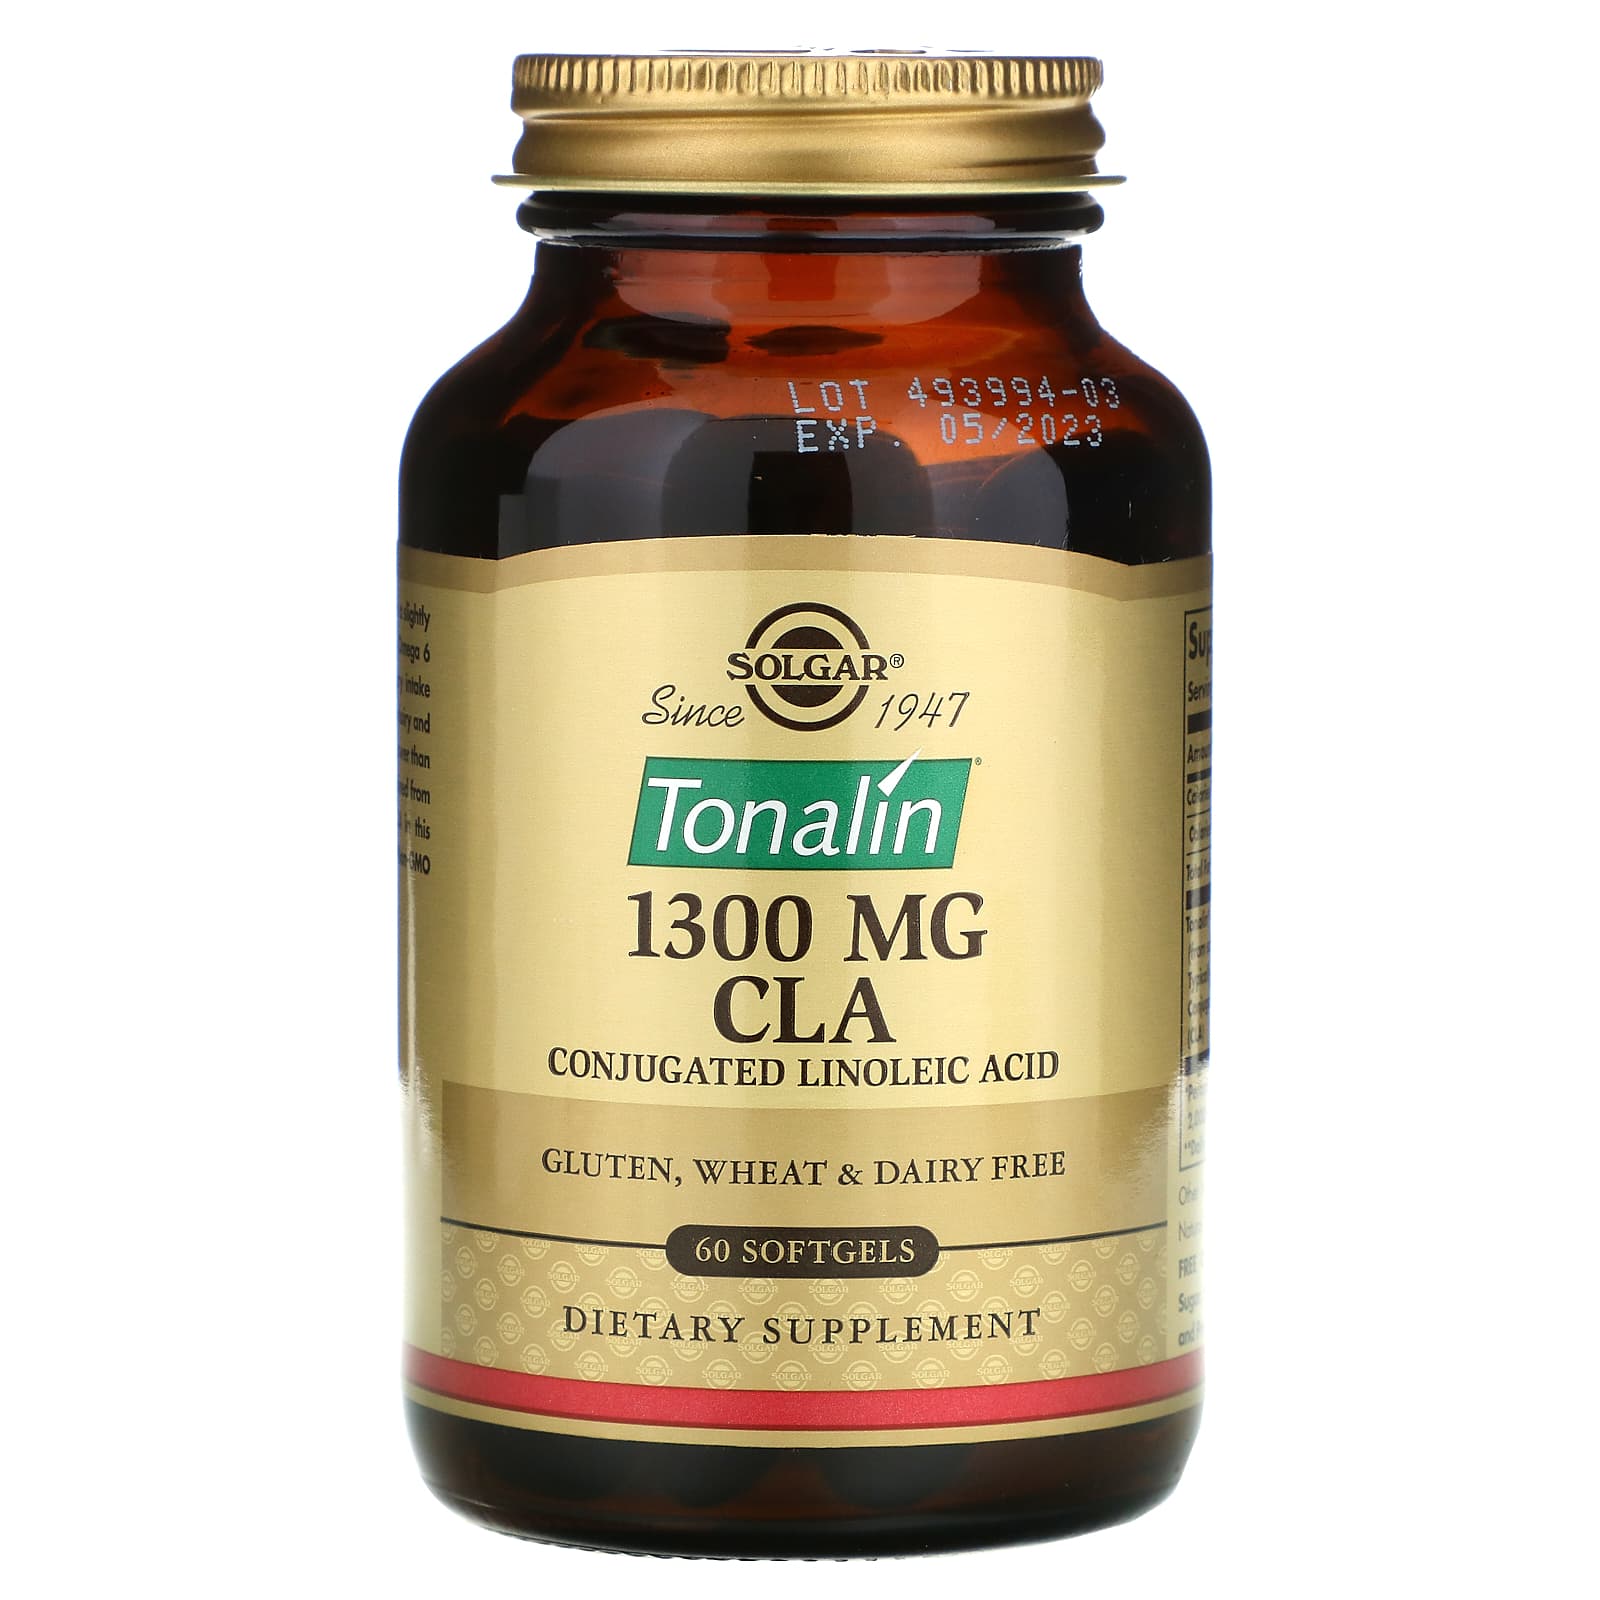 Solgar Tonalin CLA 1300 Mg, 60 Softgels - Essential Omega-6 Fatty